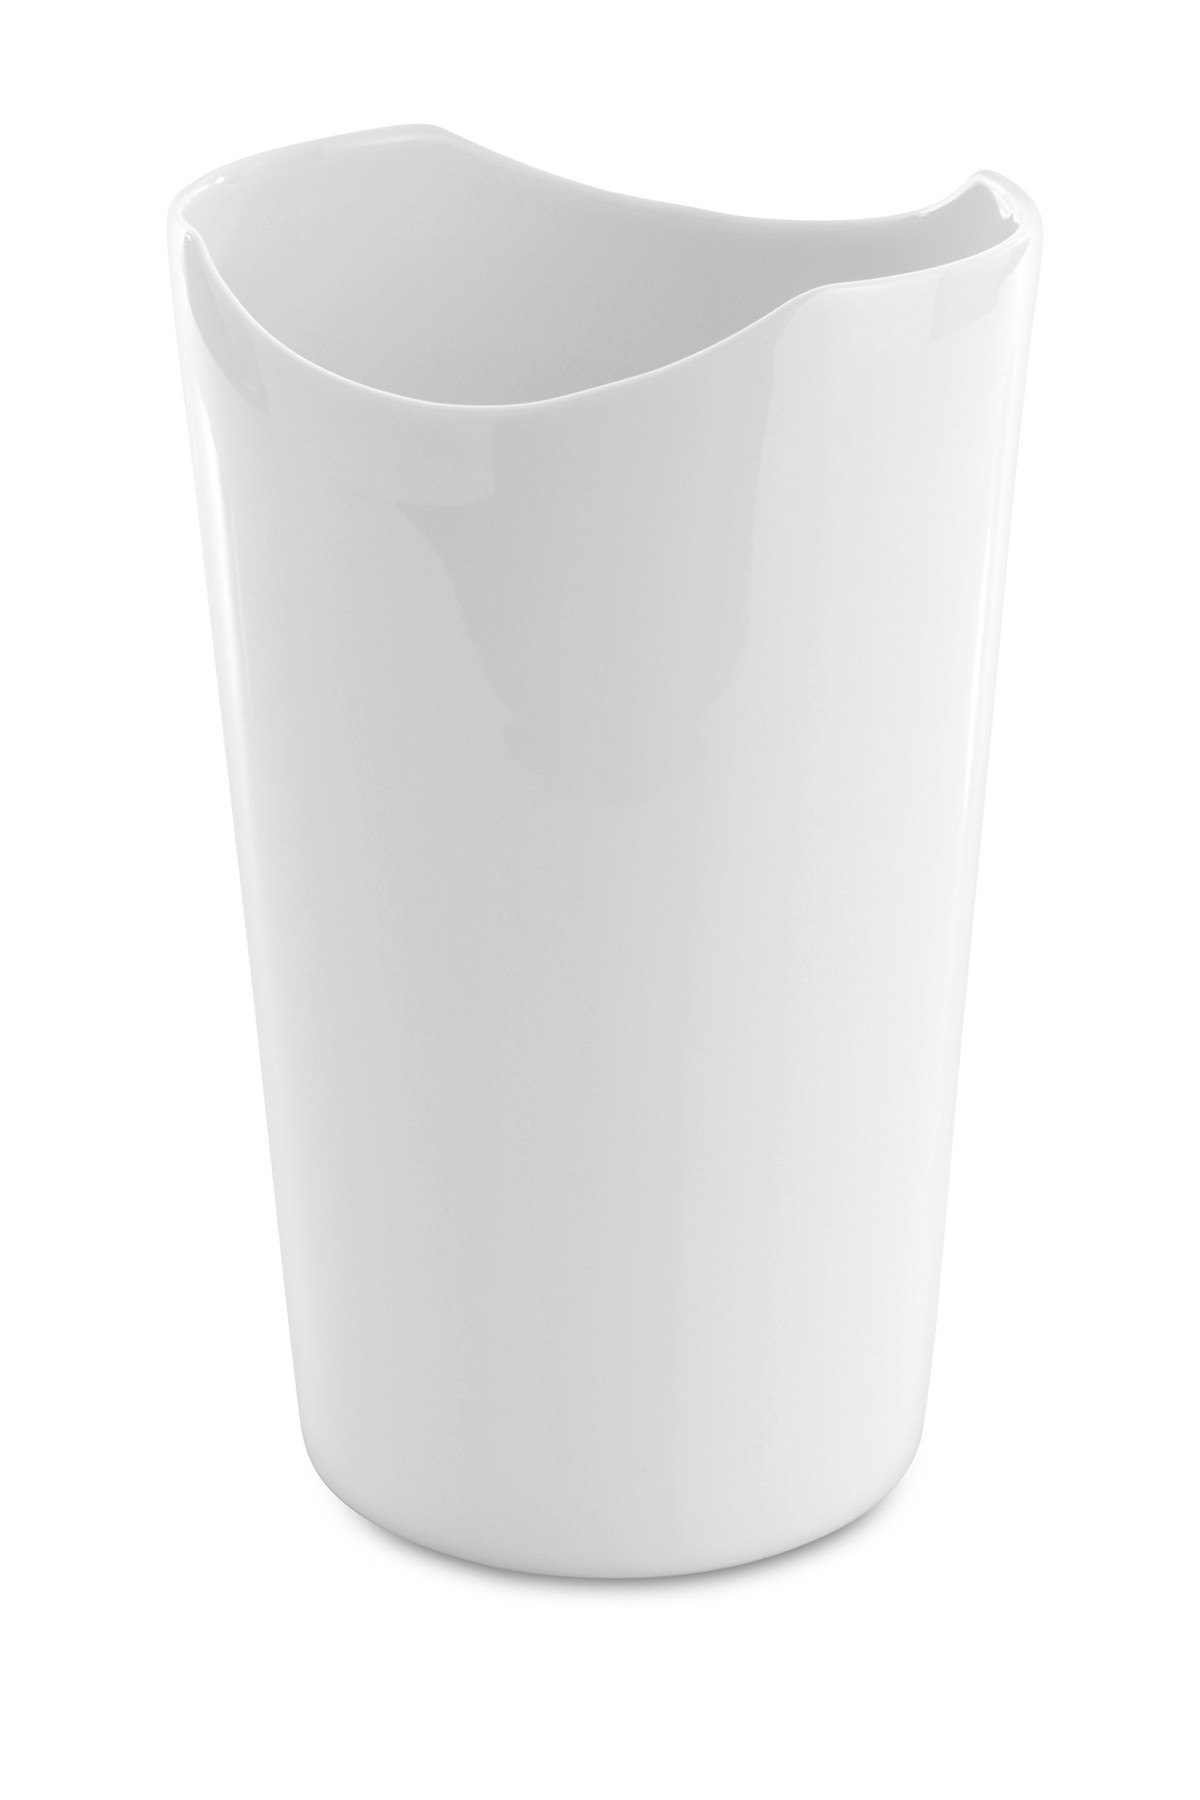 Фарфоровая ваза White Eclipse 6,25 дюйма BergHOFF